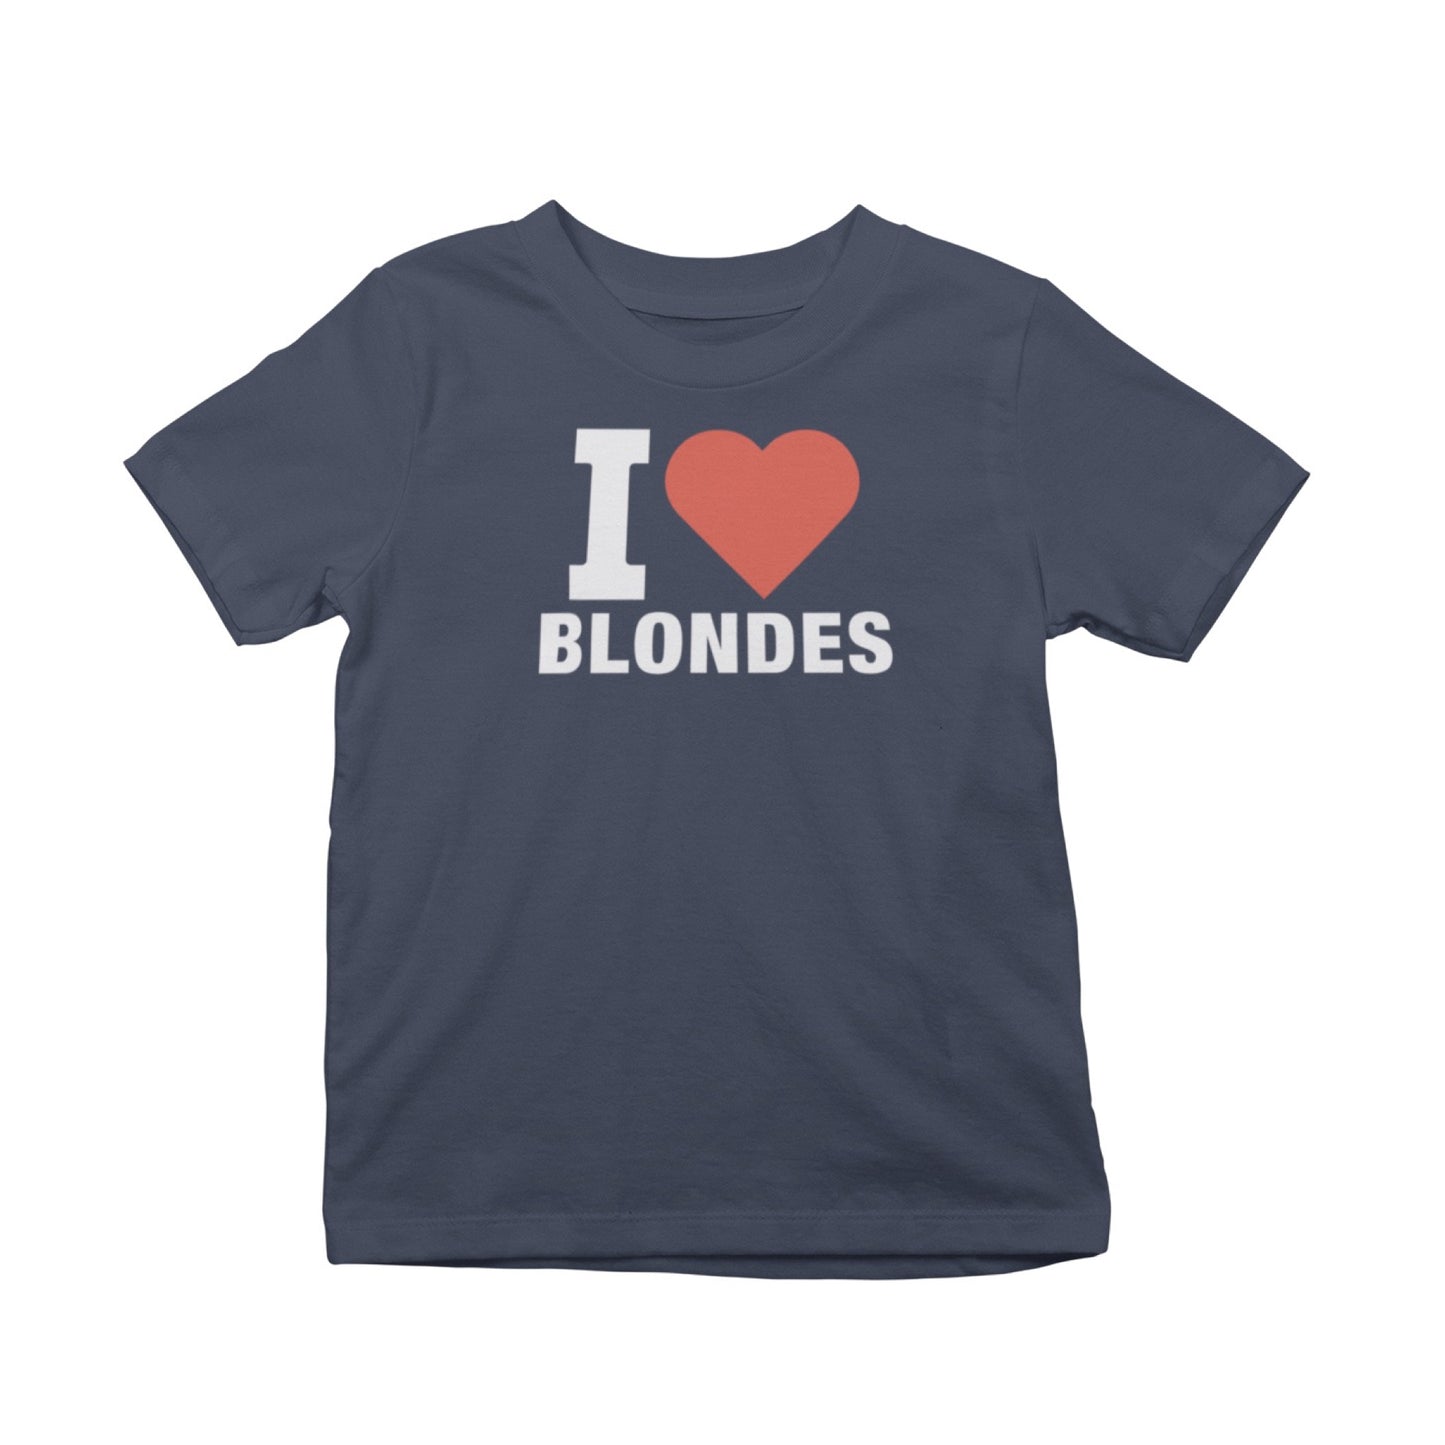 I Heart Blondes T-Shirt